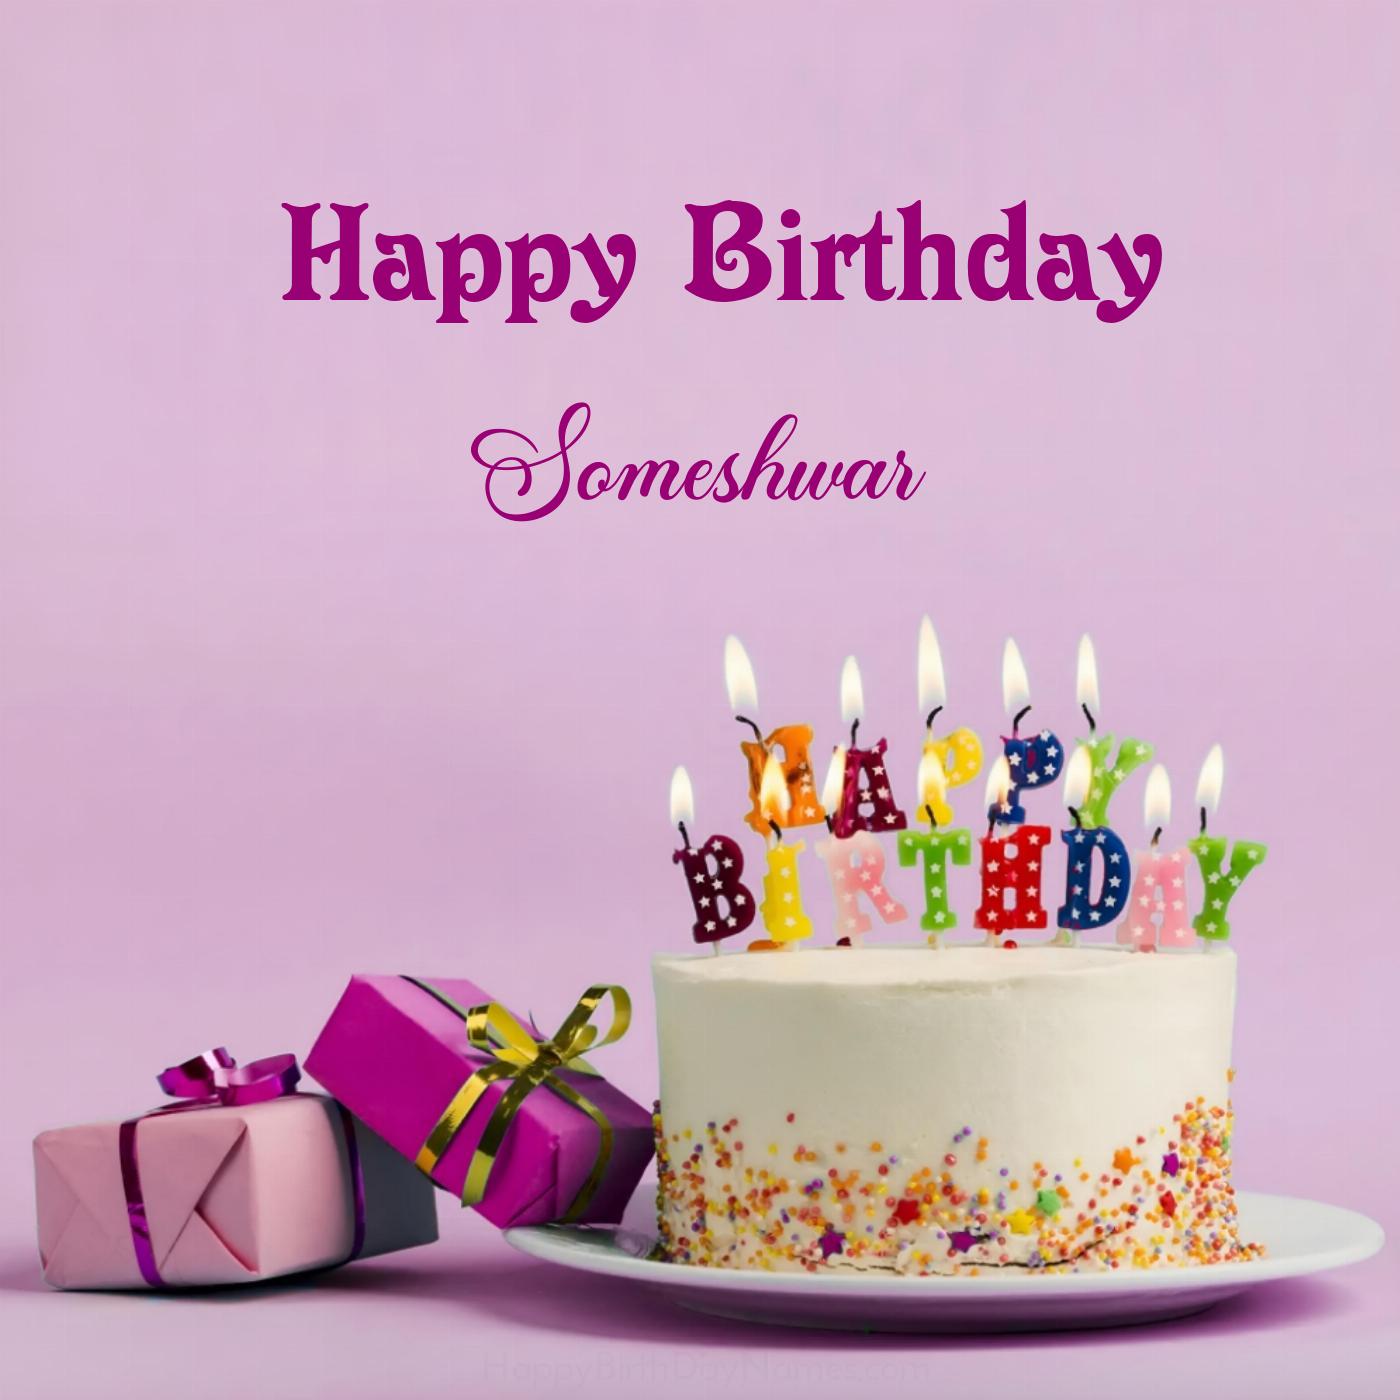 Happy Birthday Someshwar Cake Gifts Card